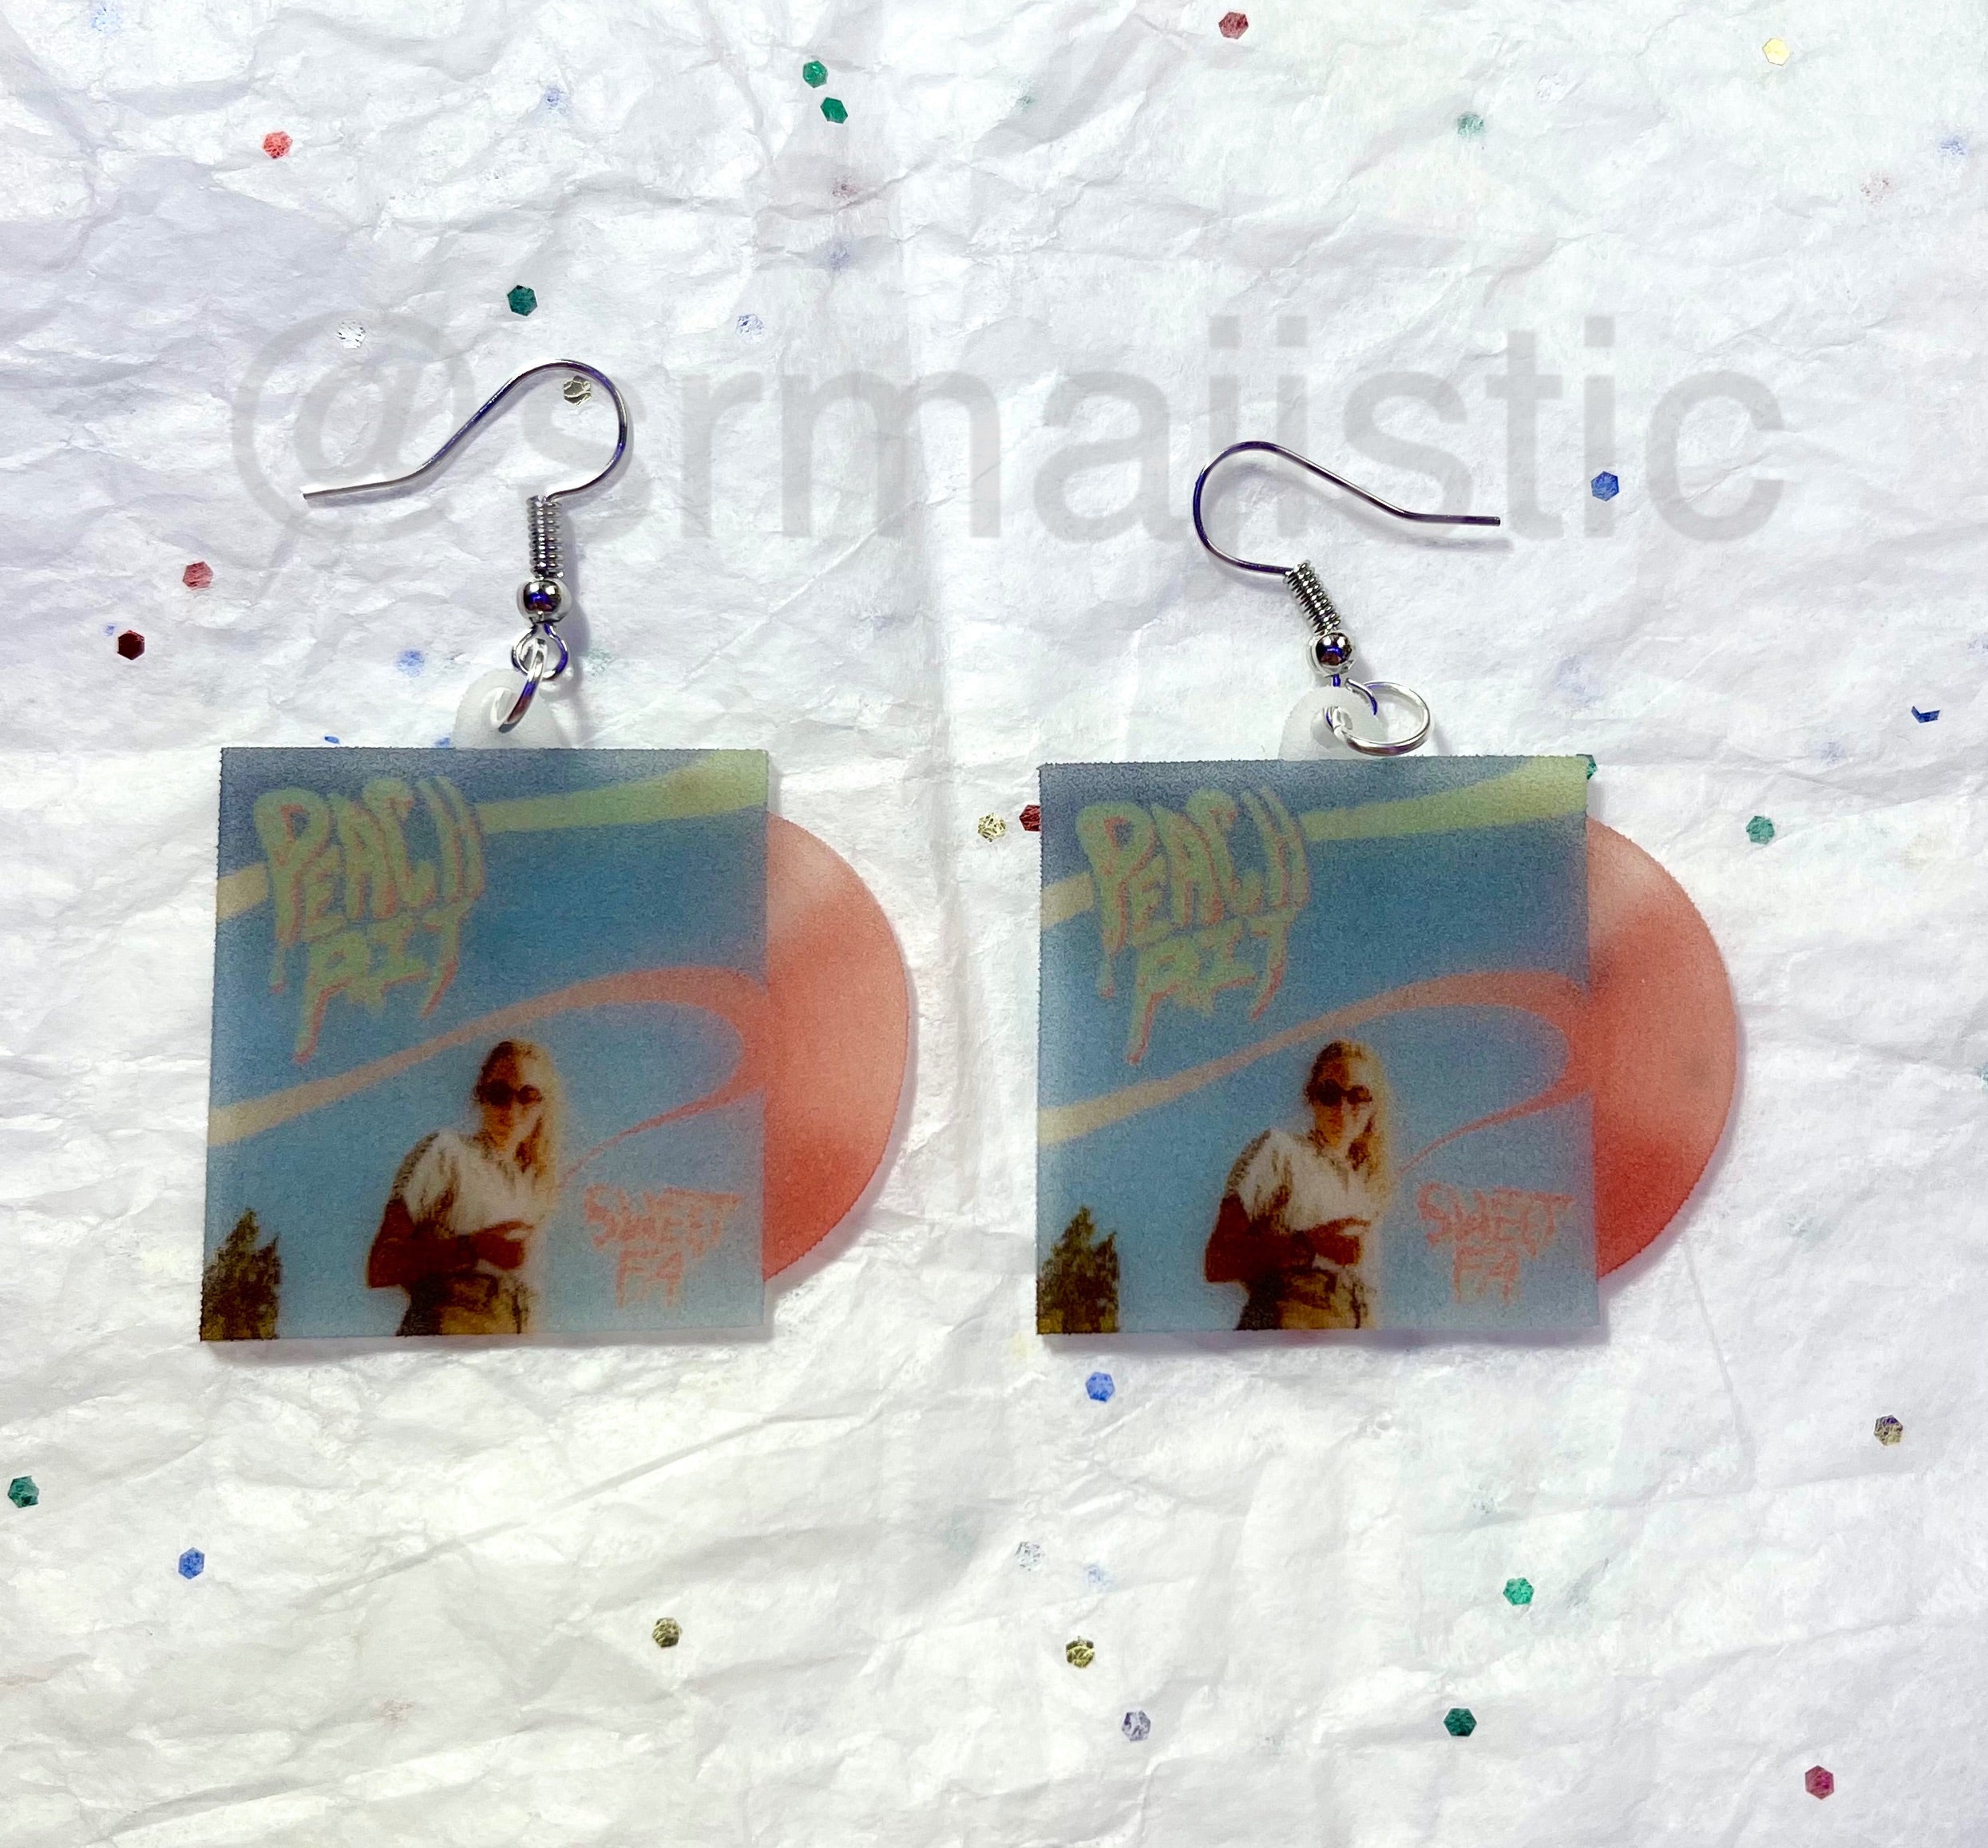 Peach Pit Sweet FA Vinyl Album Handmade Earrings!